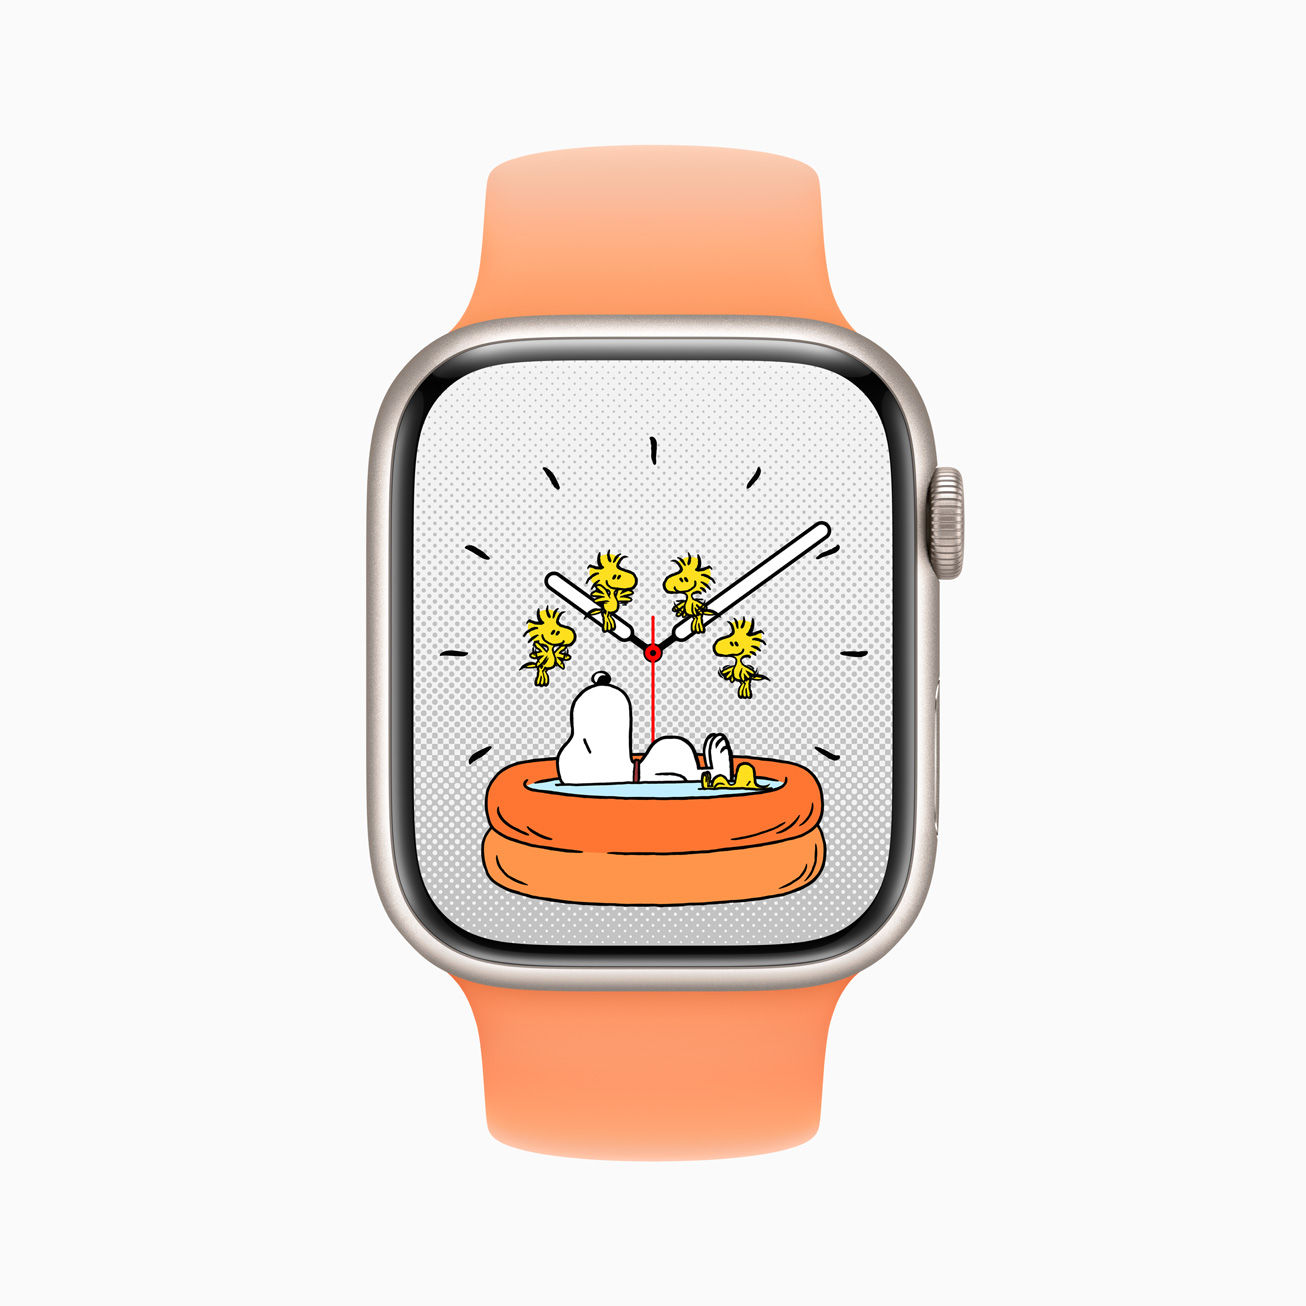 Apple Watch S9 Snoopy watch face